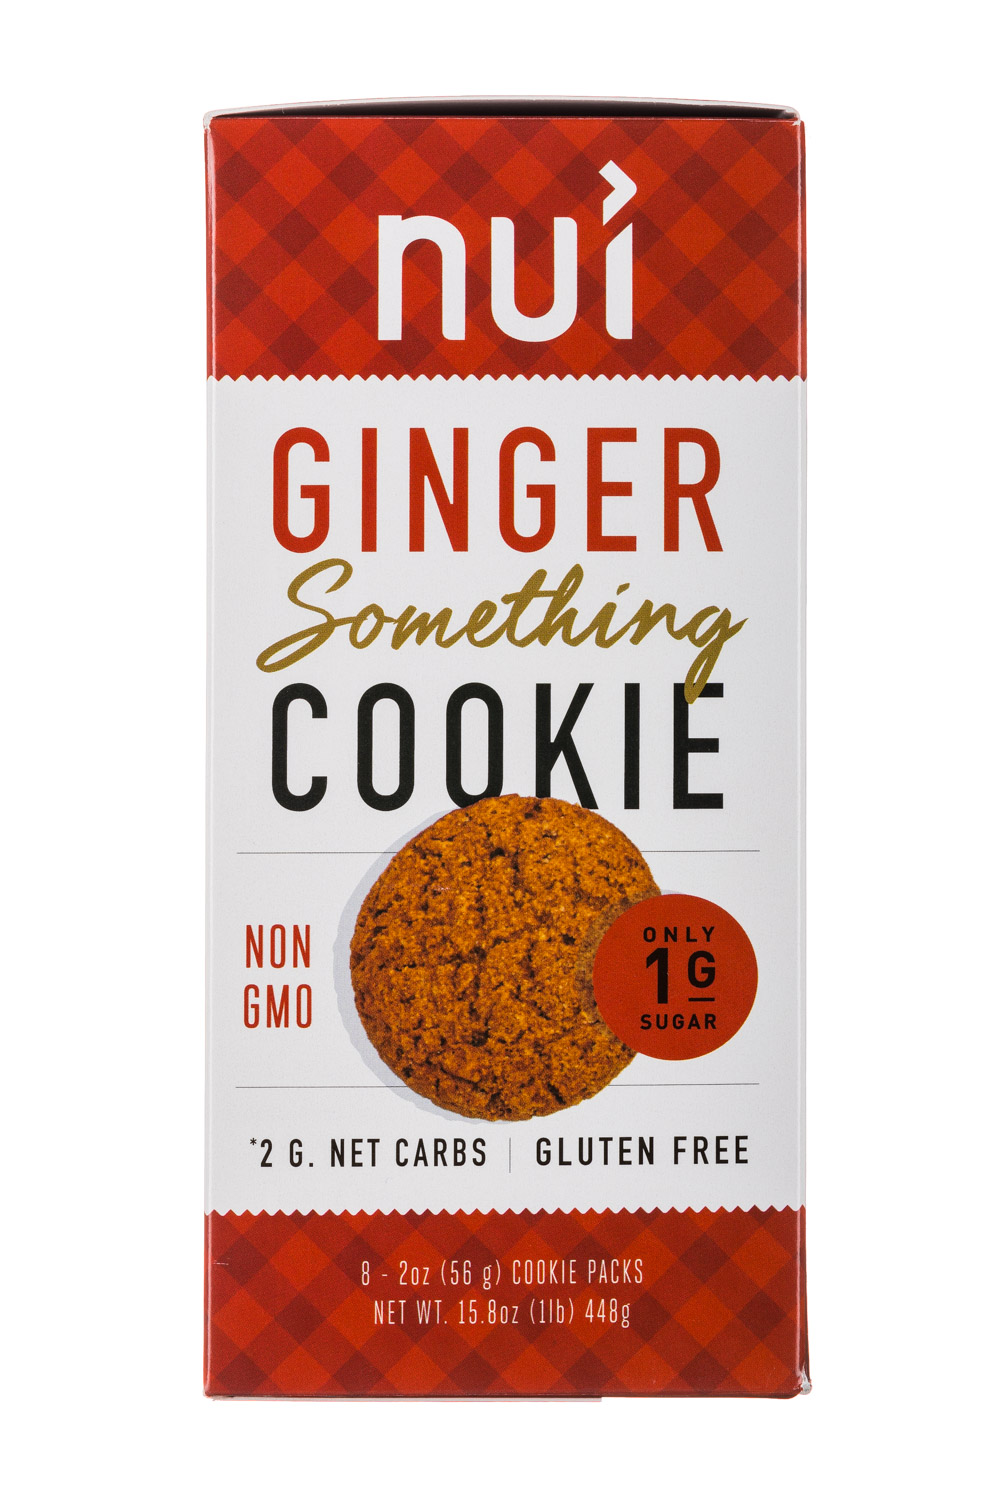 Something - Ginger Cookie (Box)